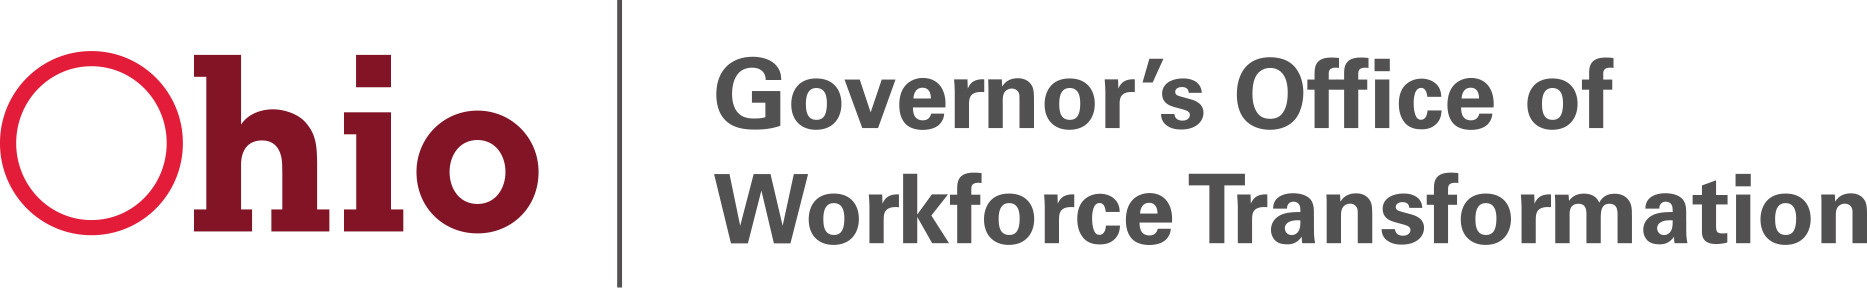 Office of Workforce Transformation Logo